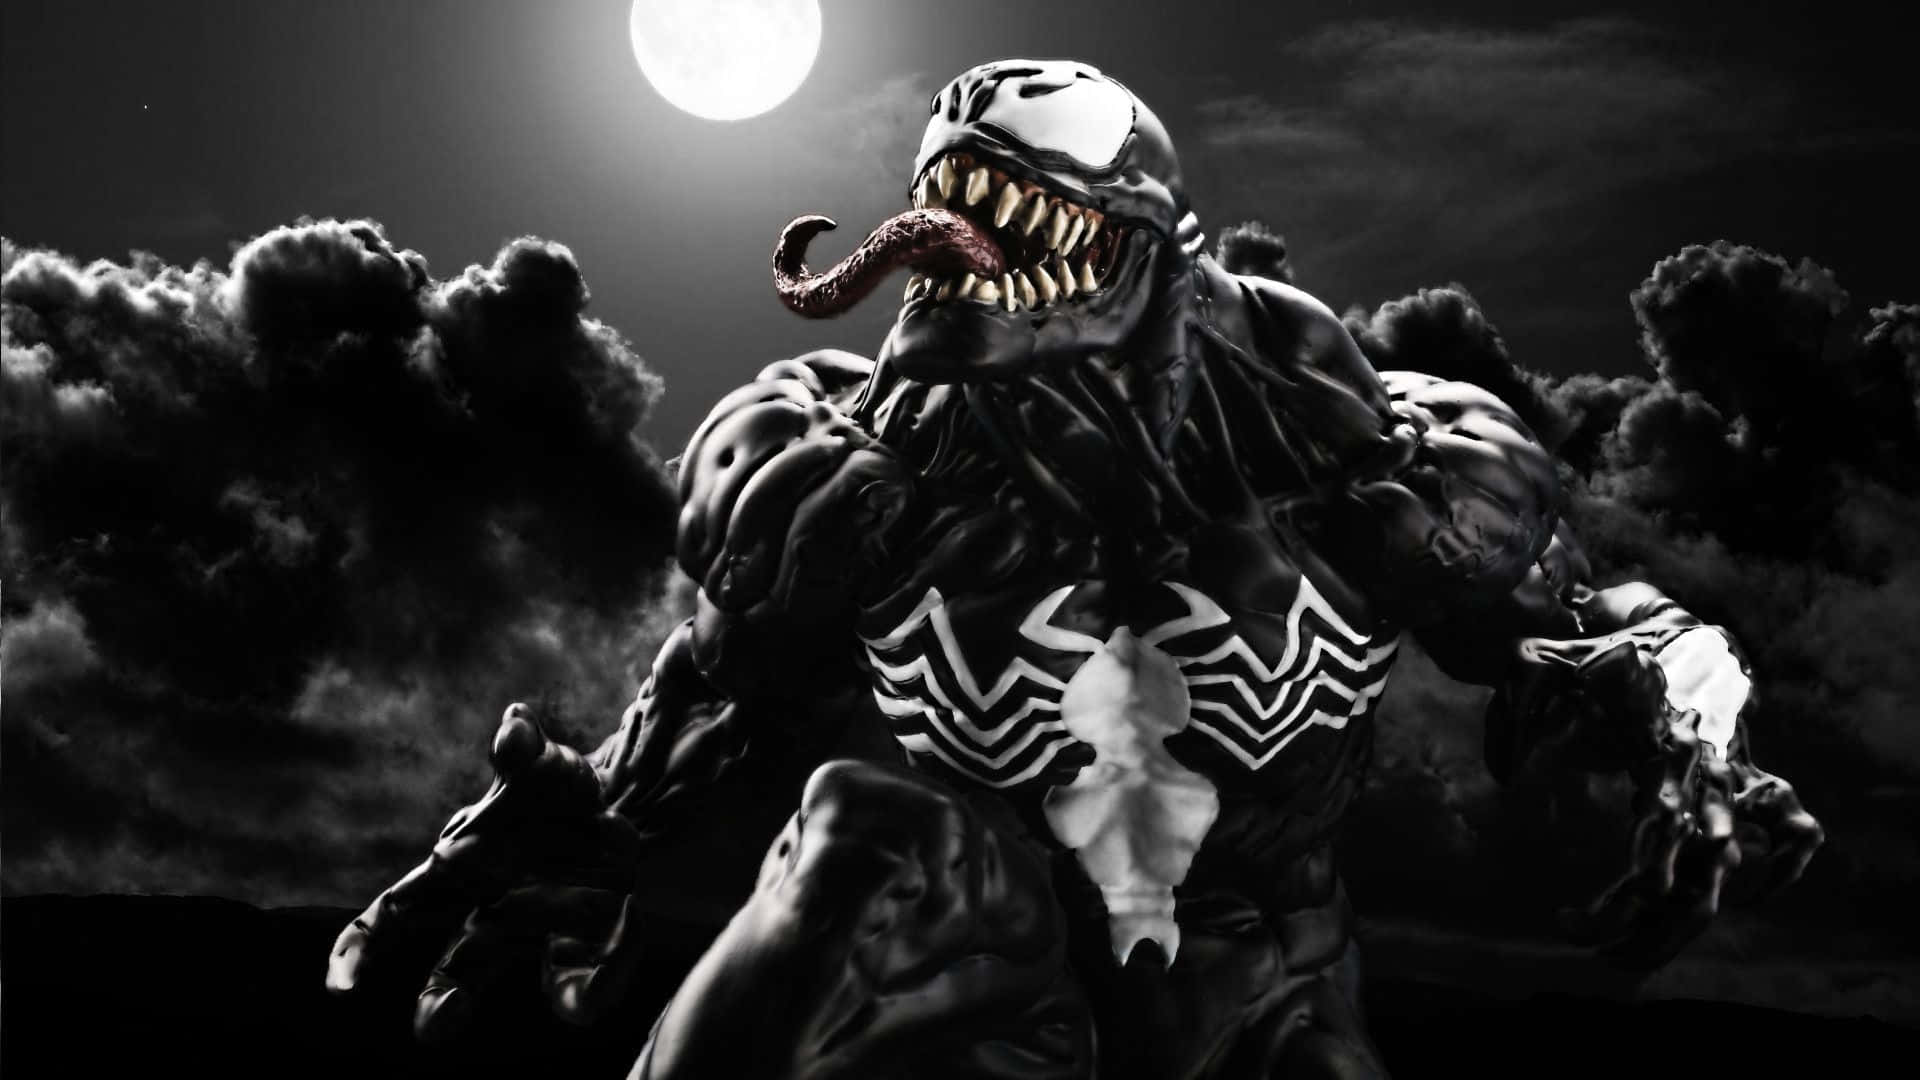 Black Venom rising amidst a fiery sky Wallpaper